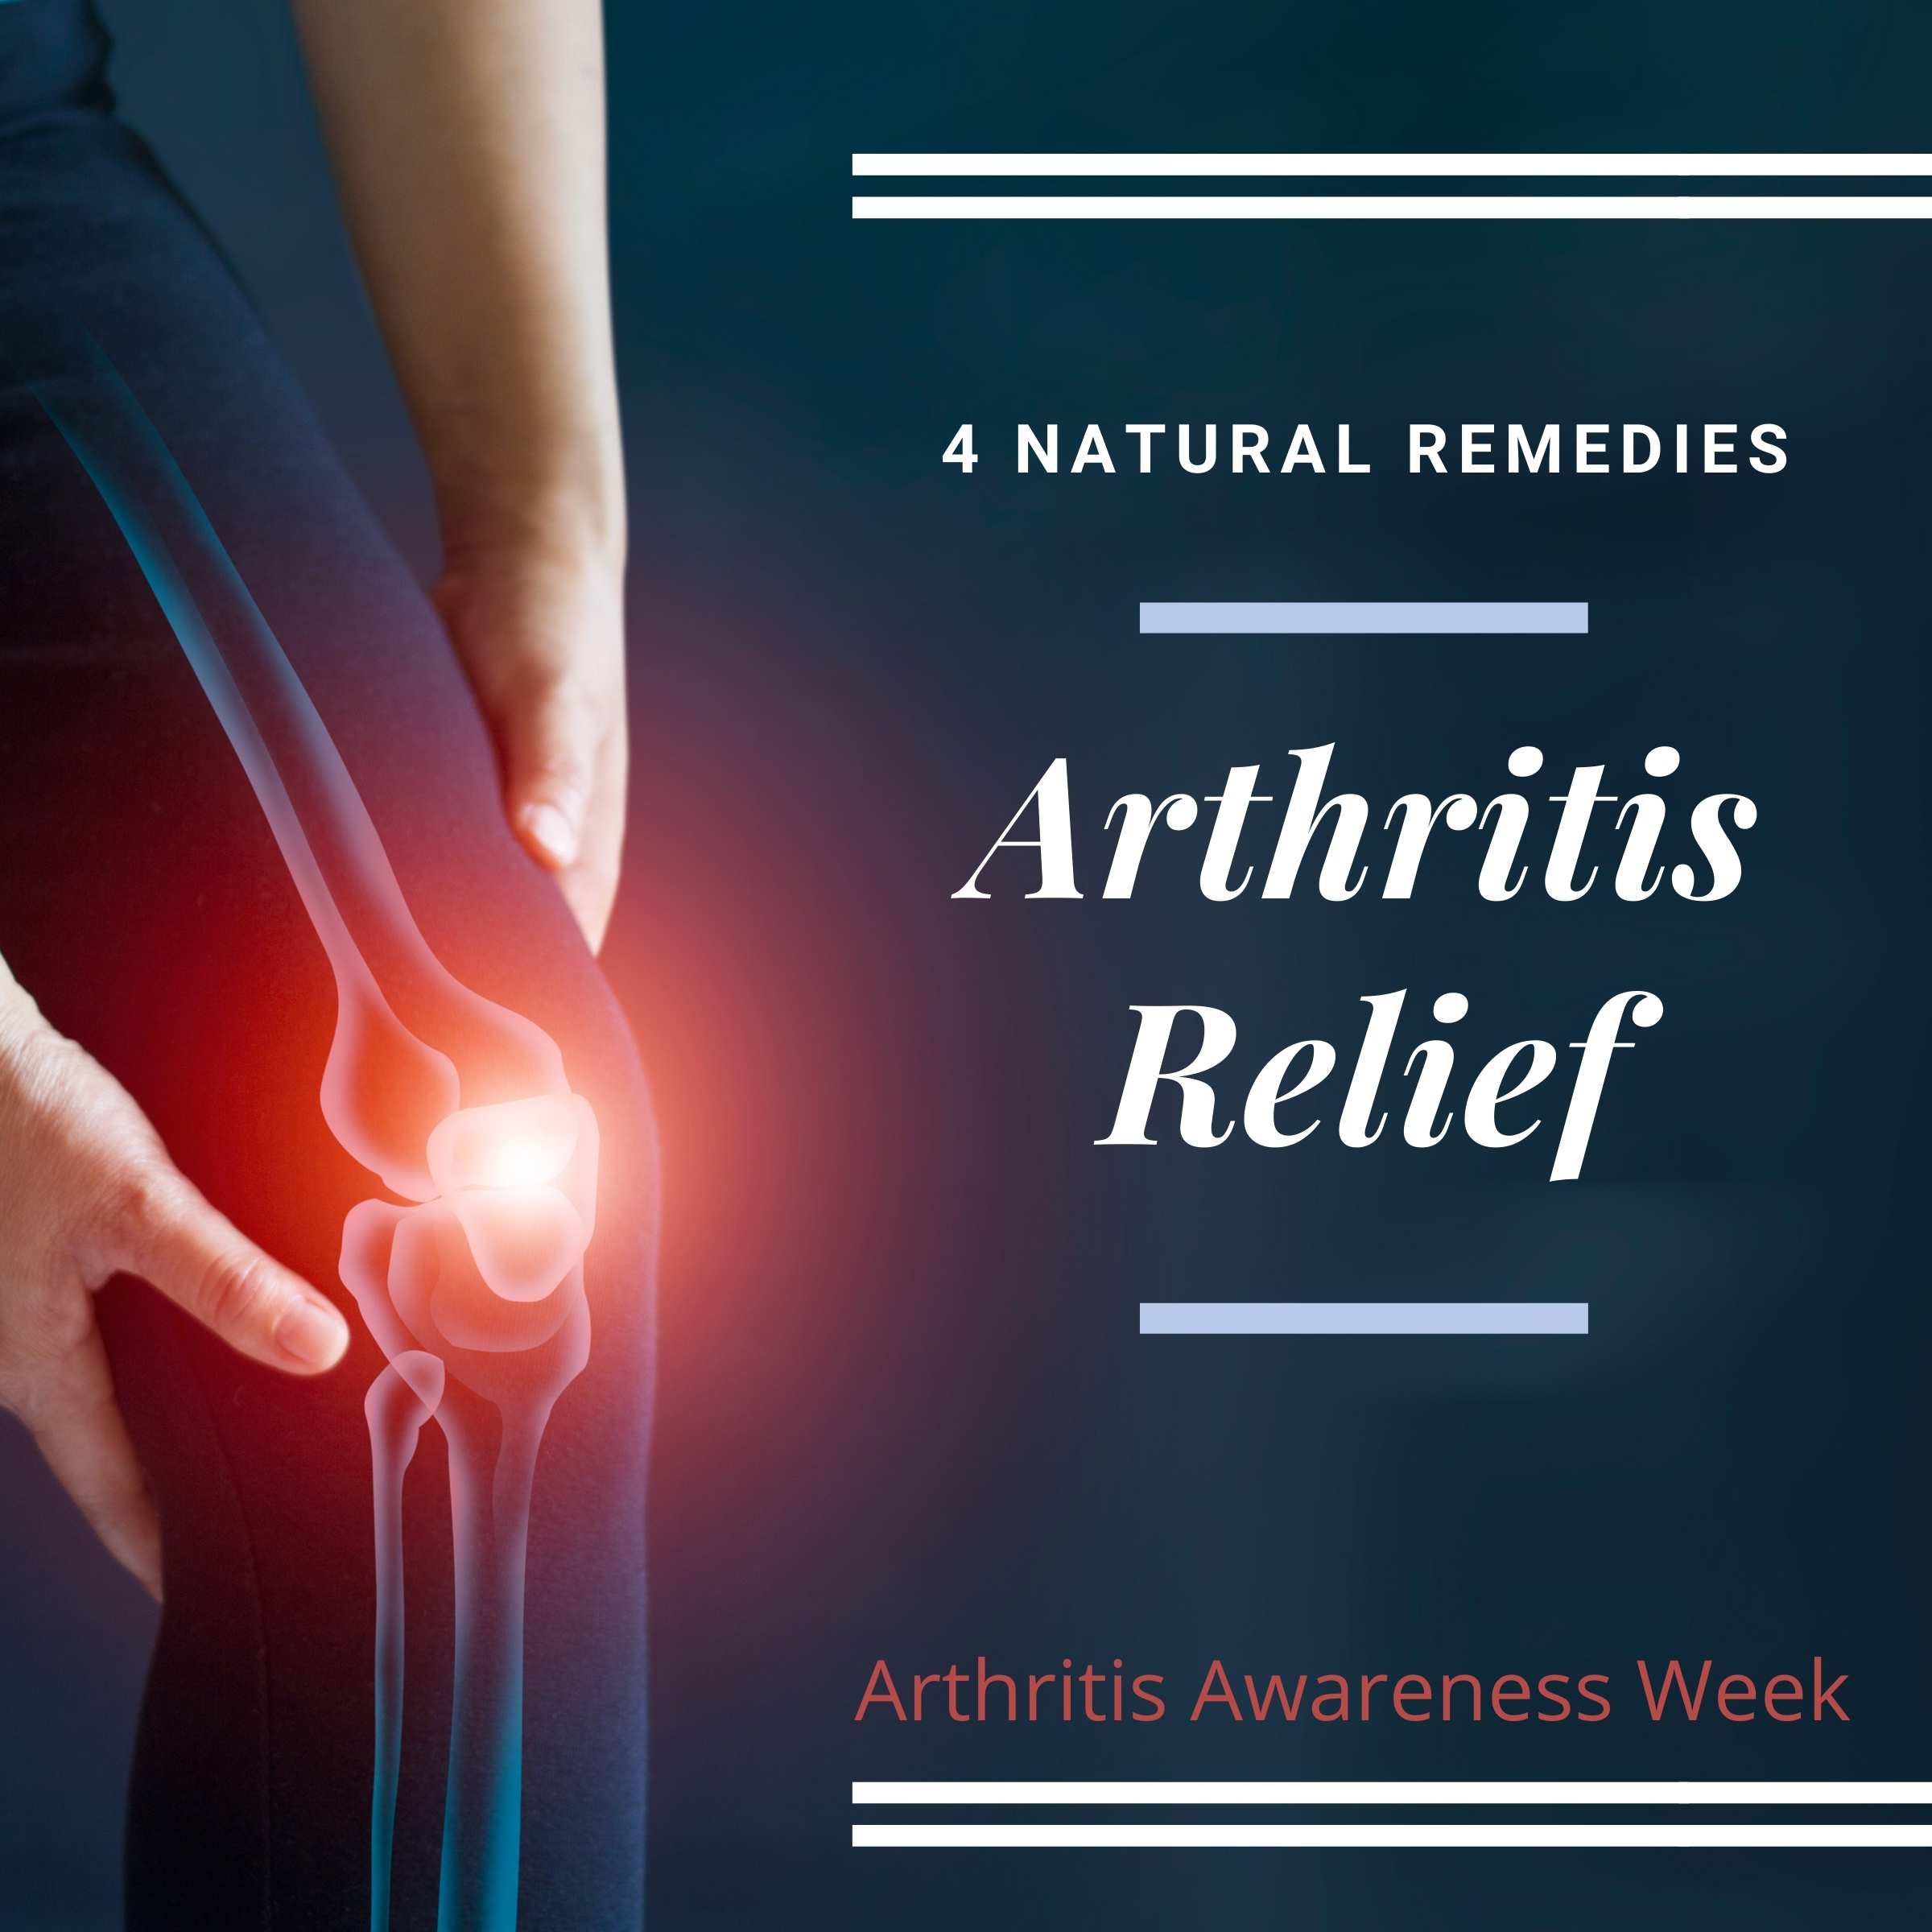 Arthritis Awareness Week